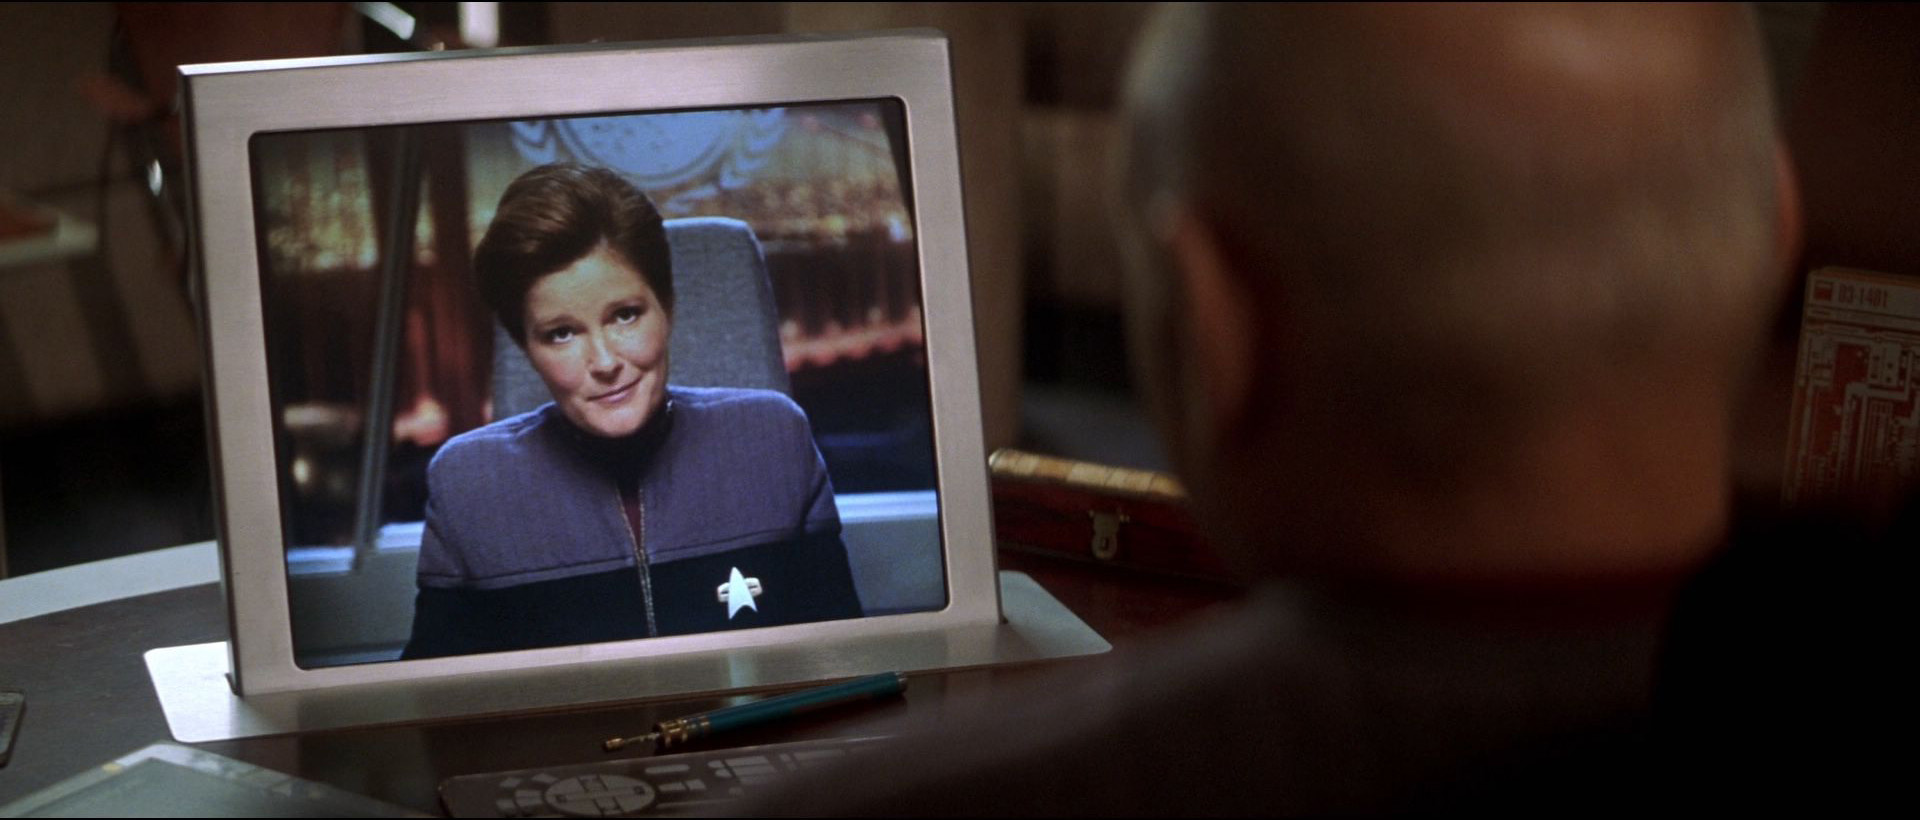 Admiral Janeway in "Star Trek: Nemesis"